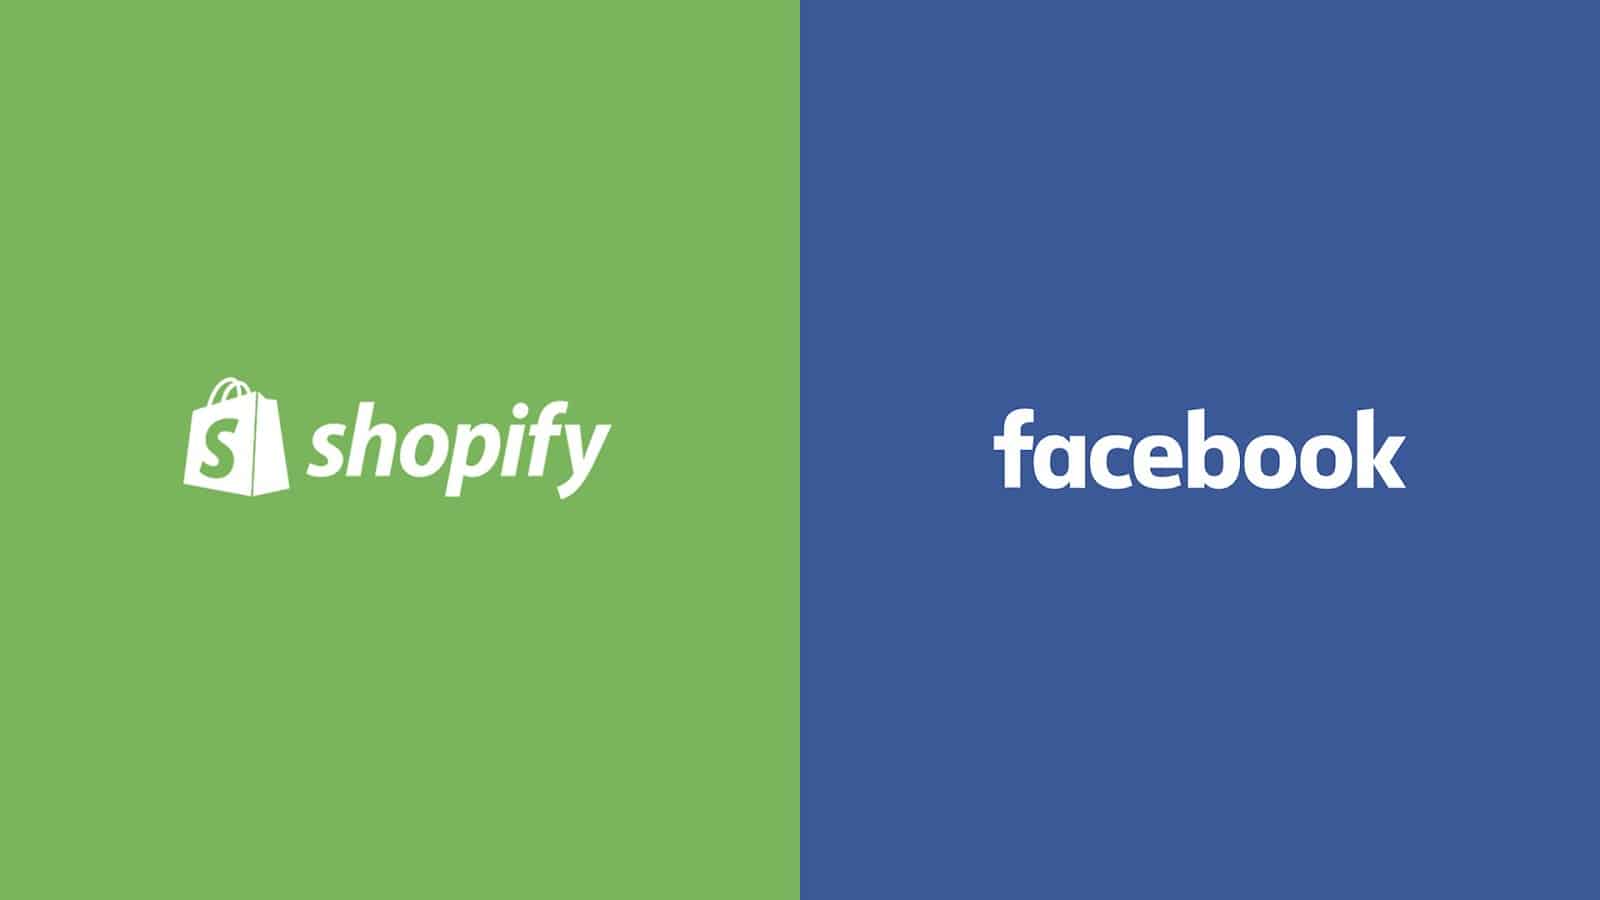 Facebook+Aliexpress+Shopify“三剑客”玩法